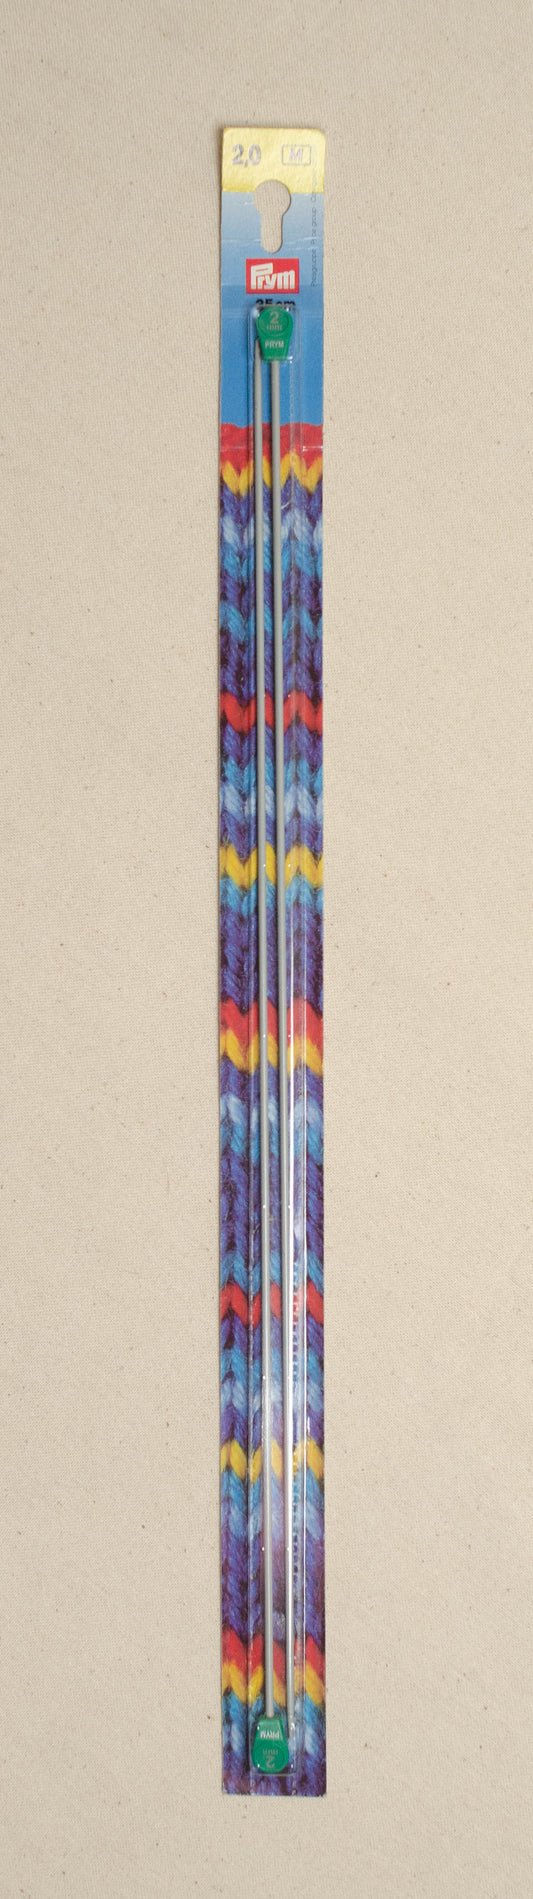 Prym 35cm Knitting Needles - 35cm X 2.0mm